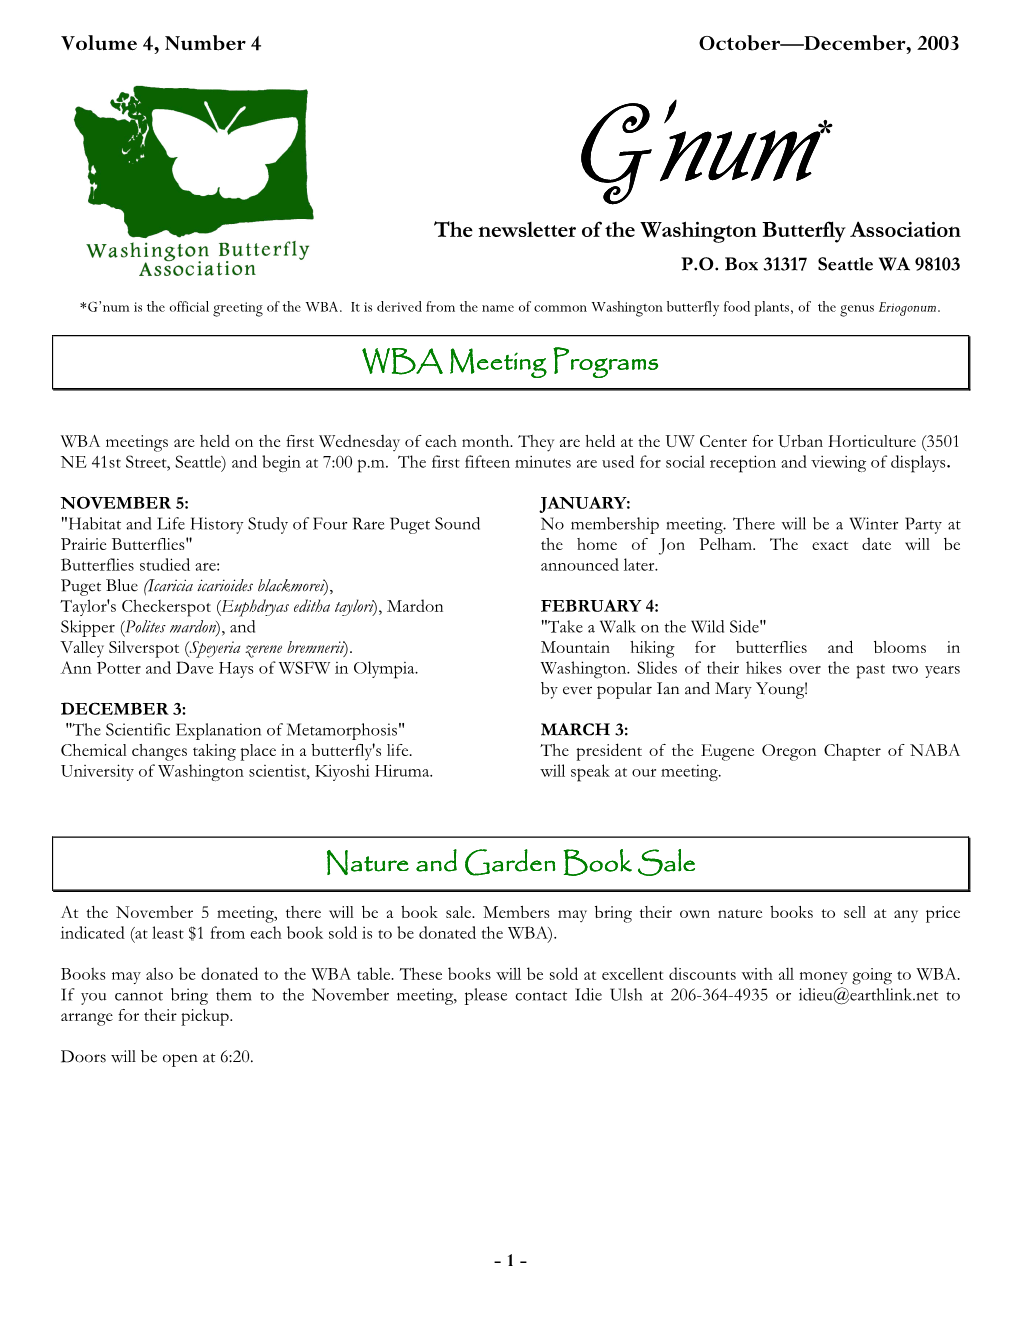 WBA Meeting Programs Nature and Garden Book Sale